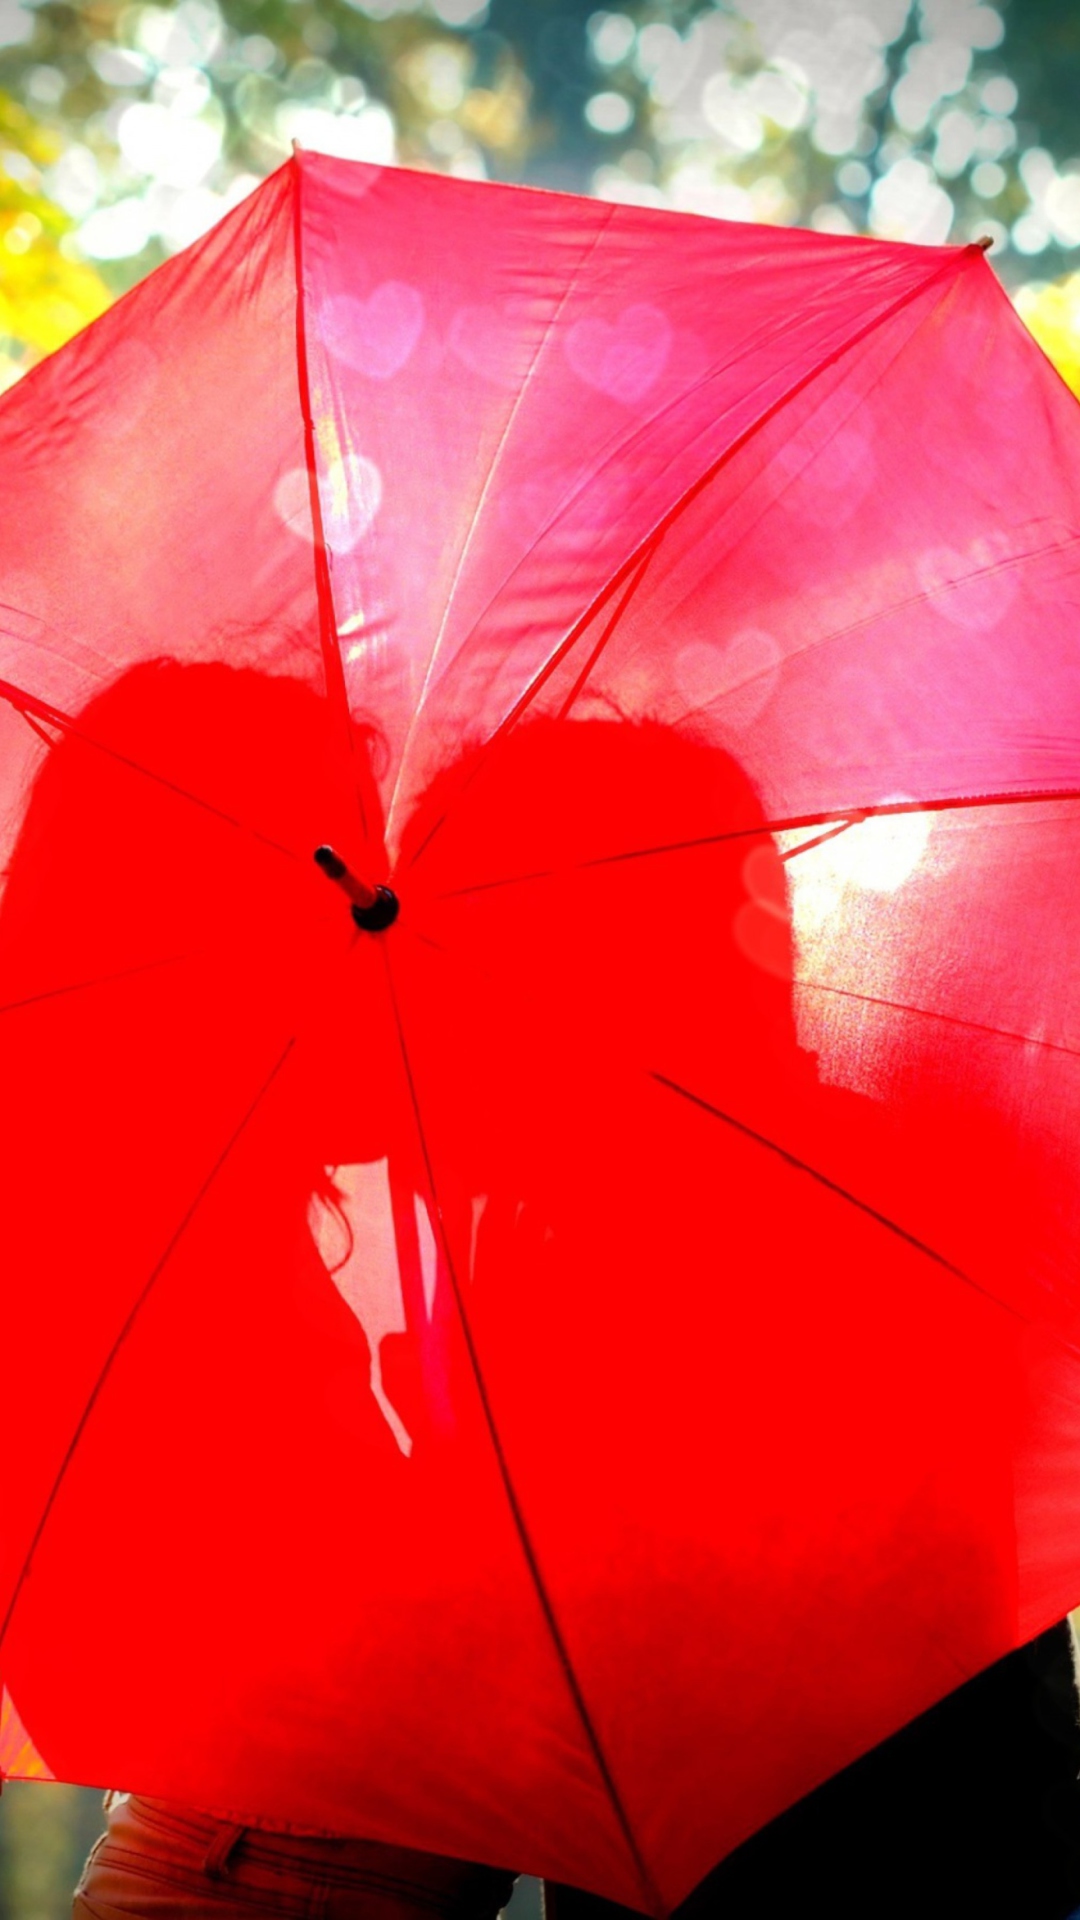 Das Couple Behind Red Umbrella Wallpaper 1080x1920